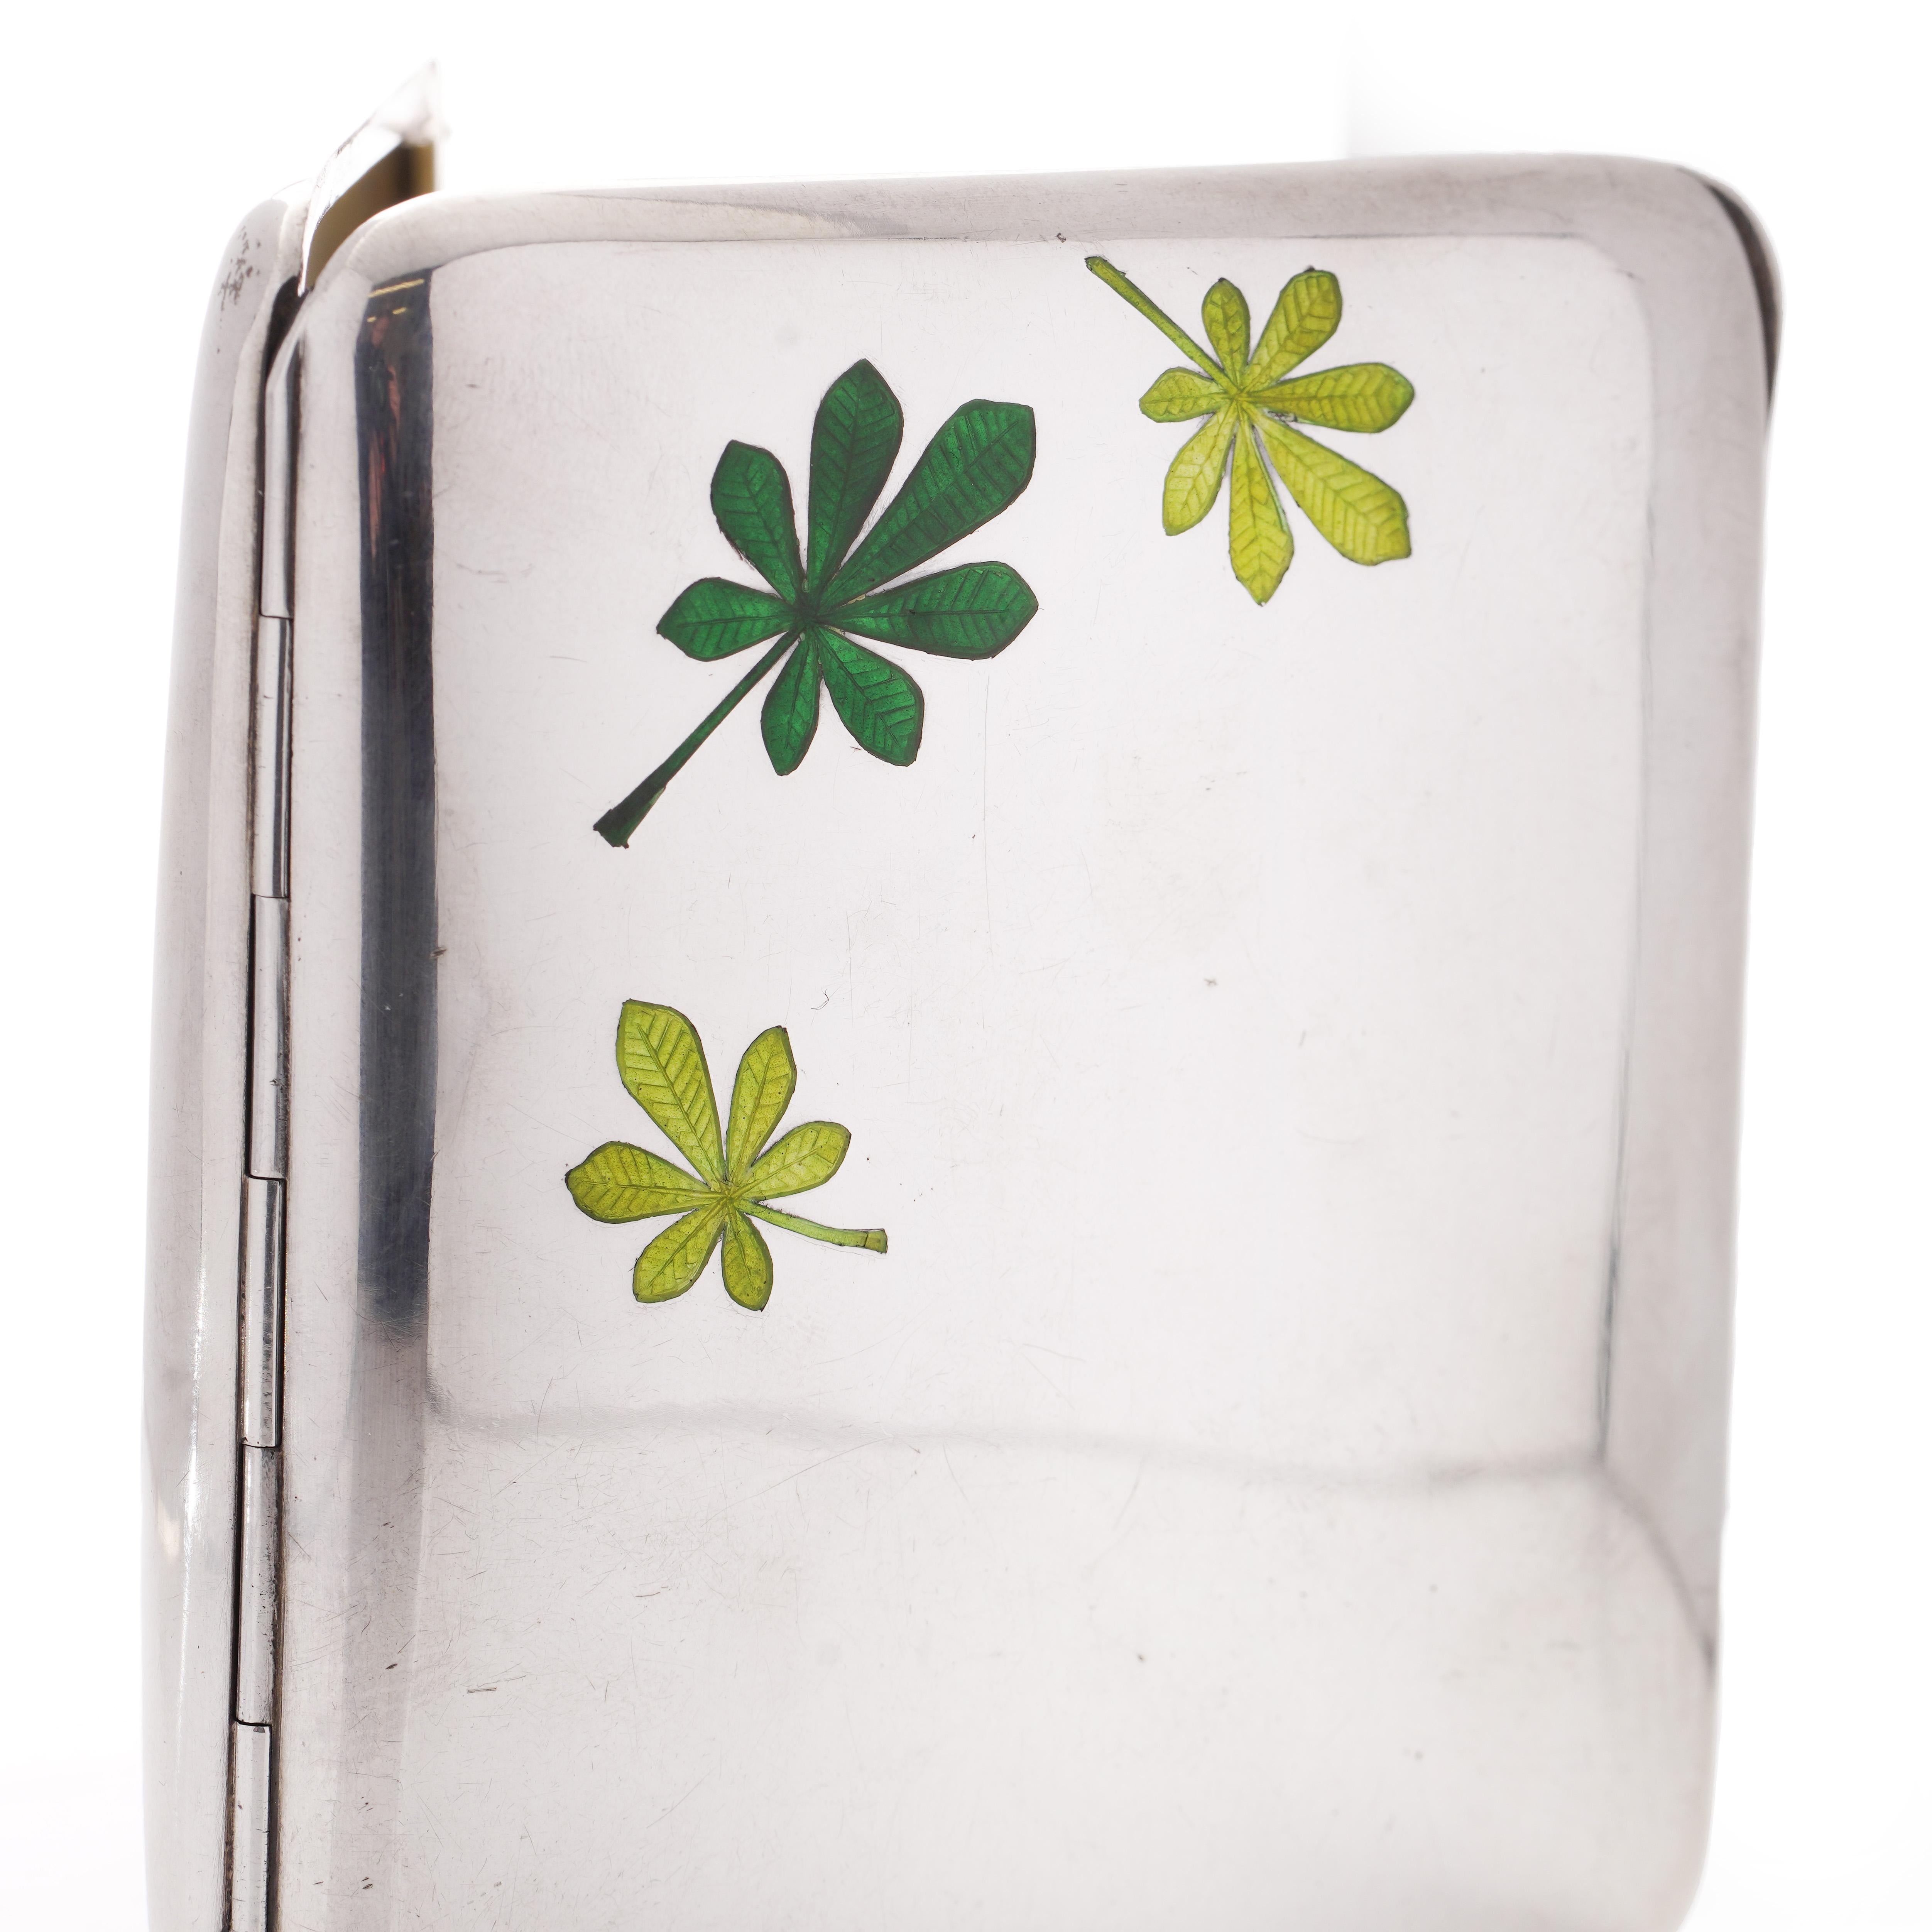 Art Deco period Austrian 935. silver cigarette case with enamel leaf ornaments  For Sale 2